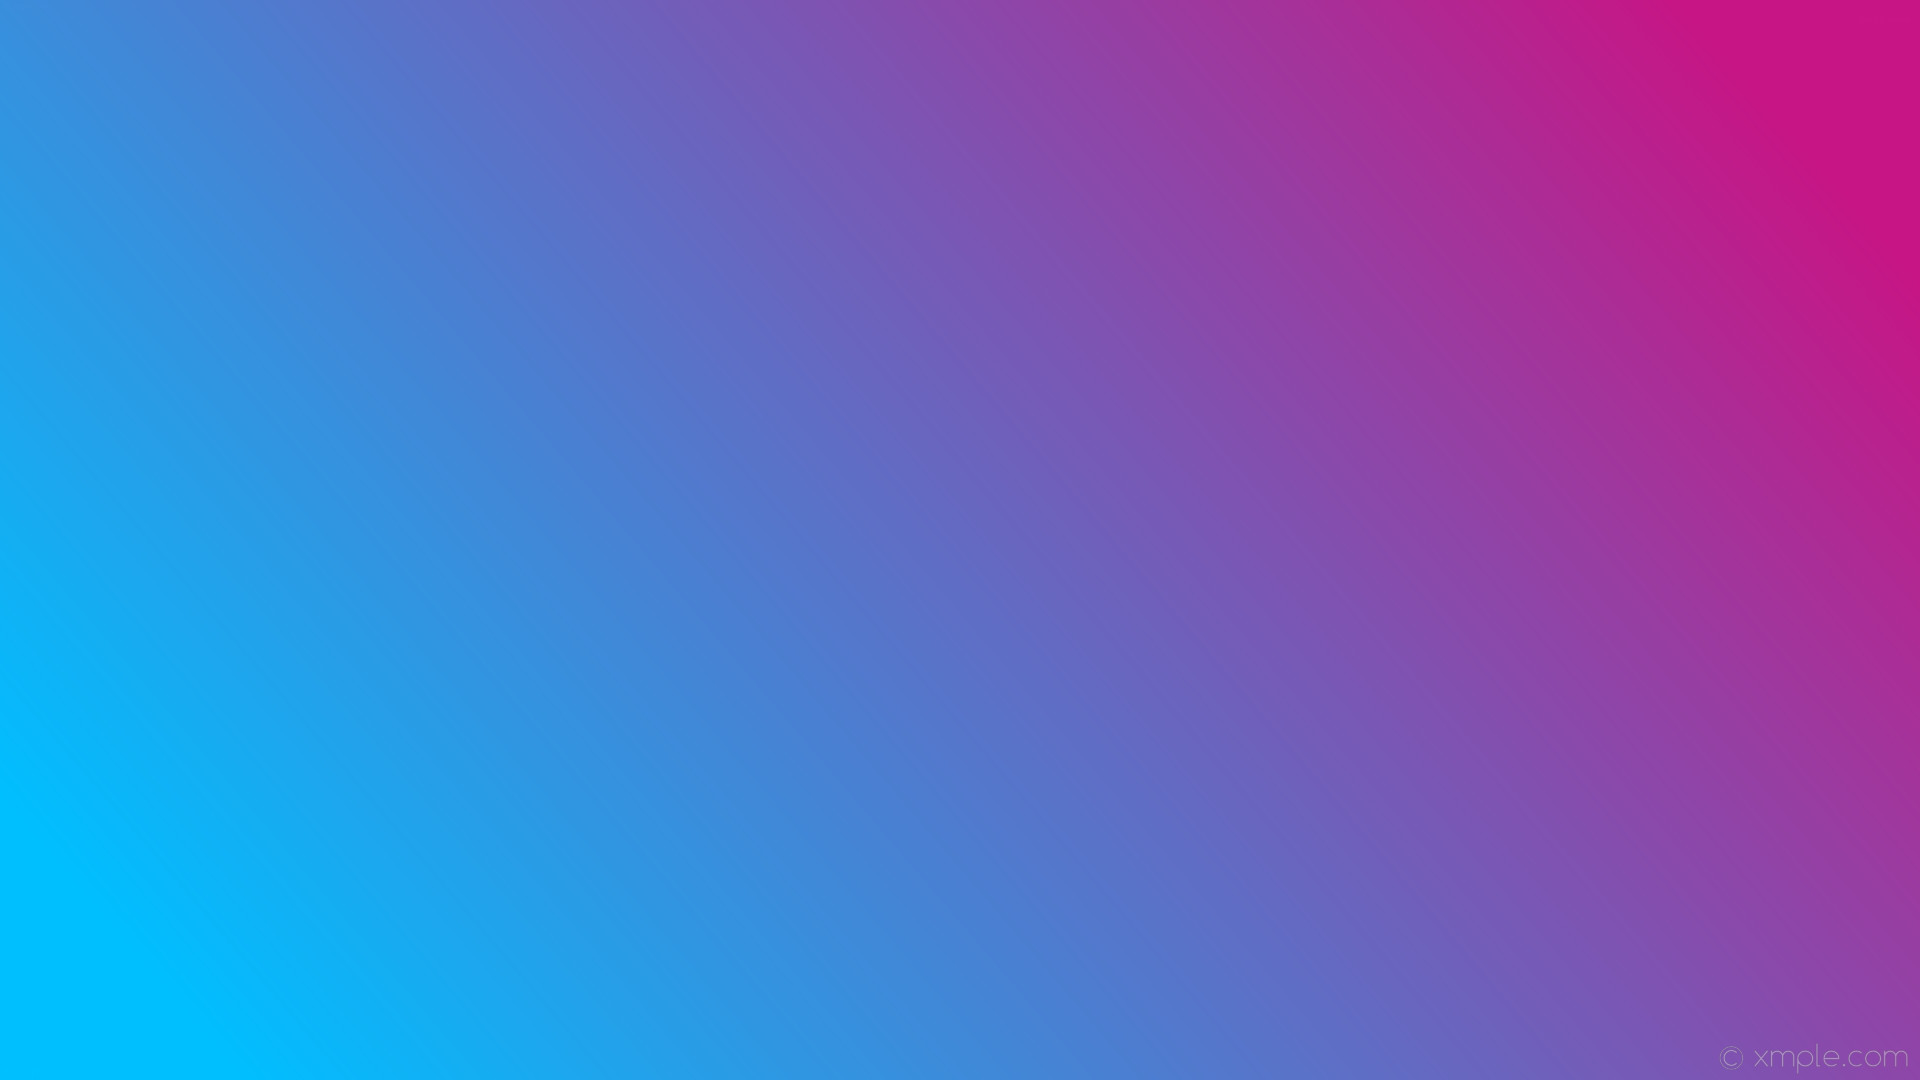 1920x1080 wallpaper linear gradient pink blue medium violet red deep sky blue #c71585  #00bfff 15